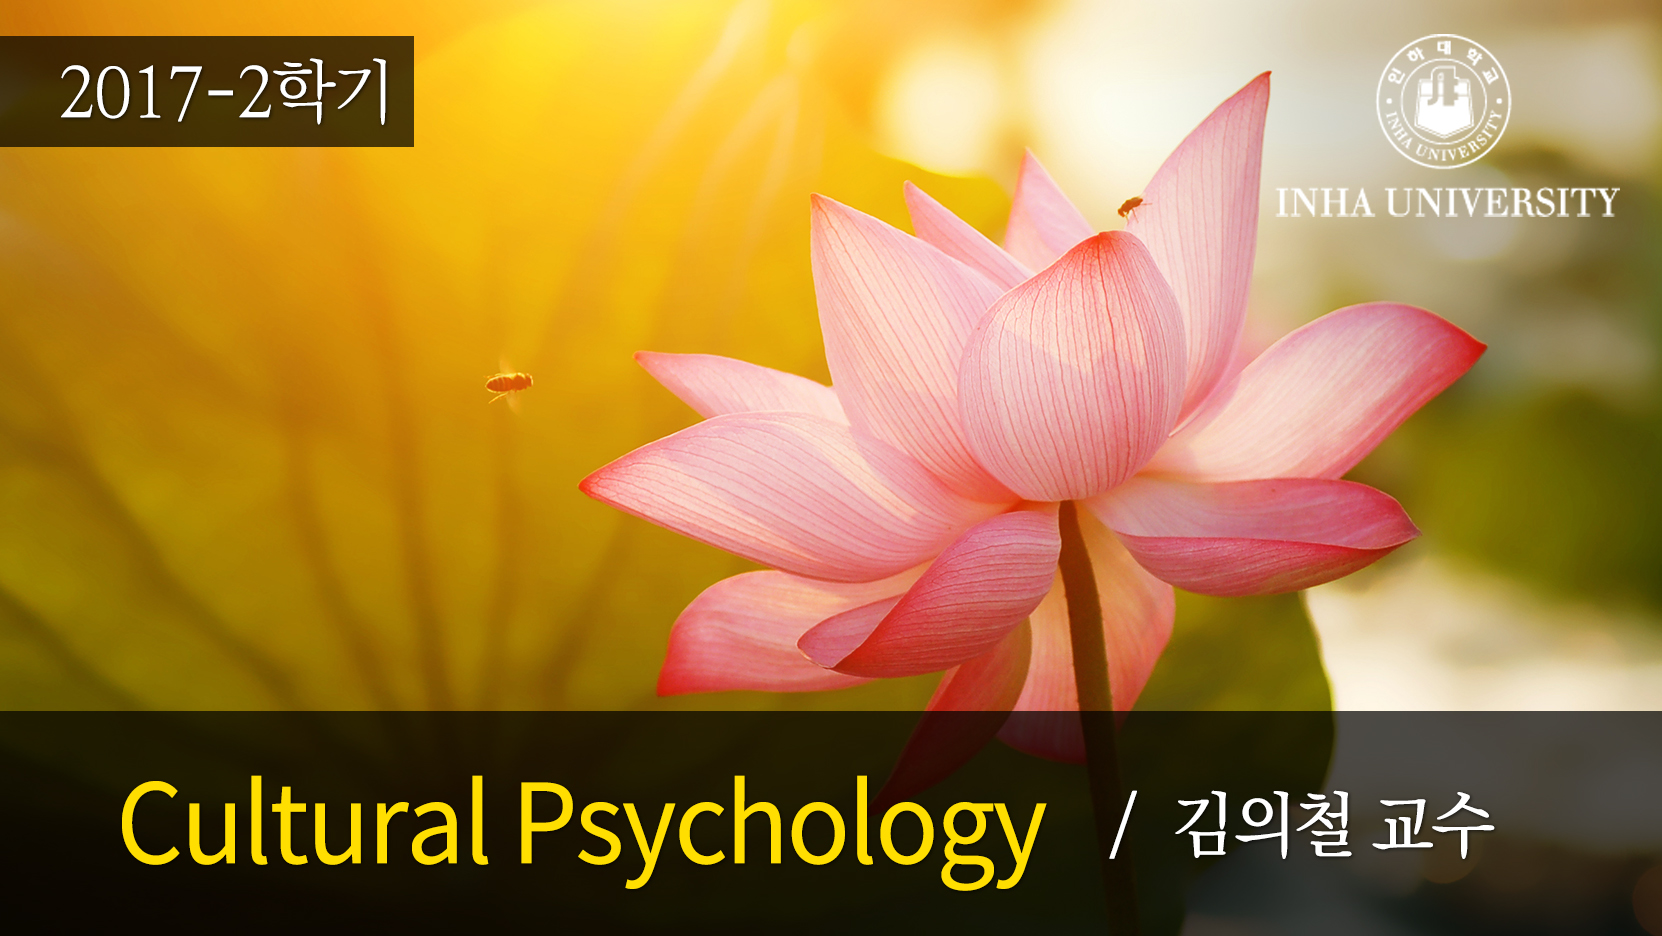 Cultural Psychology 개강일 2017-10-16 종강일 2018-01-28 강좌상태 종료